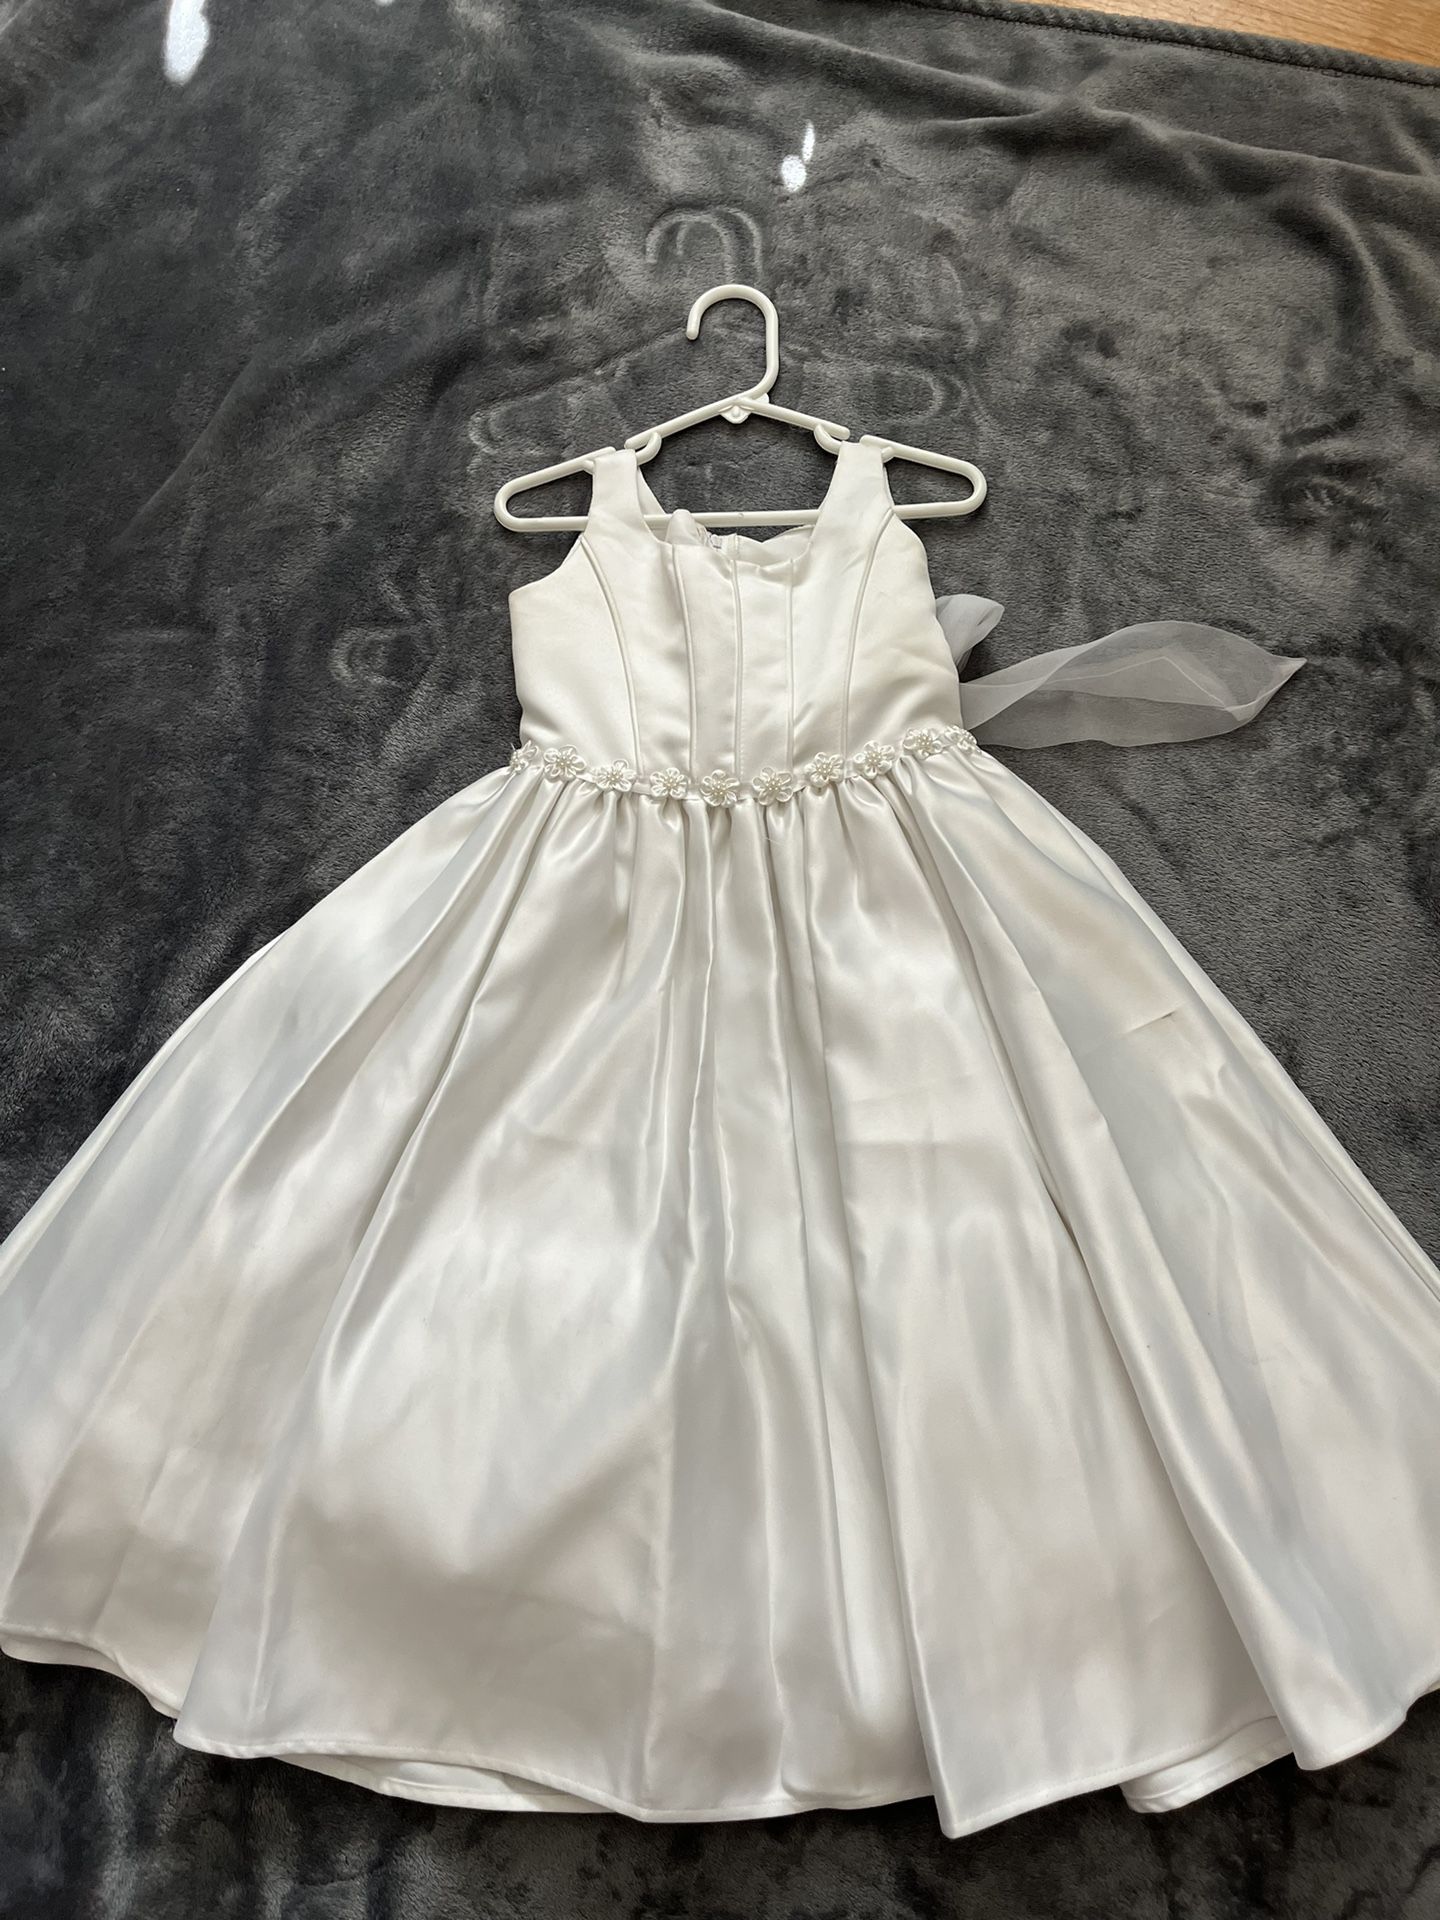 $15 Baptism Dress Size 4